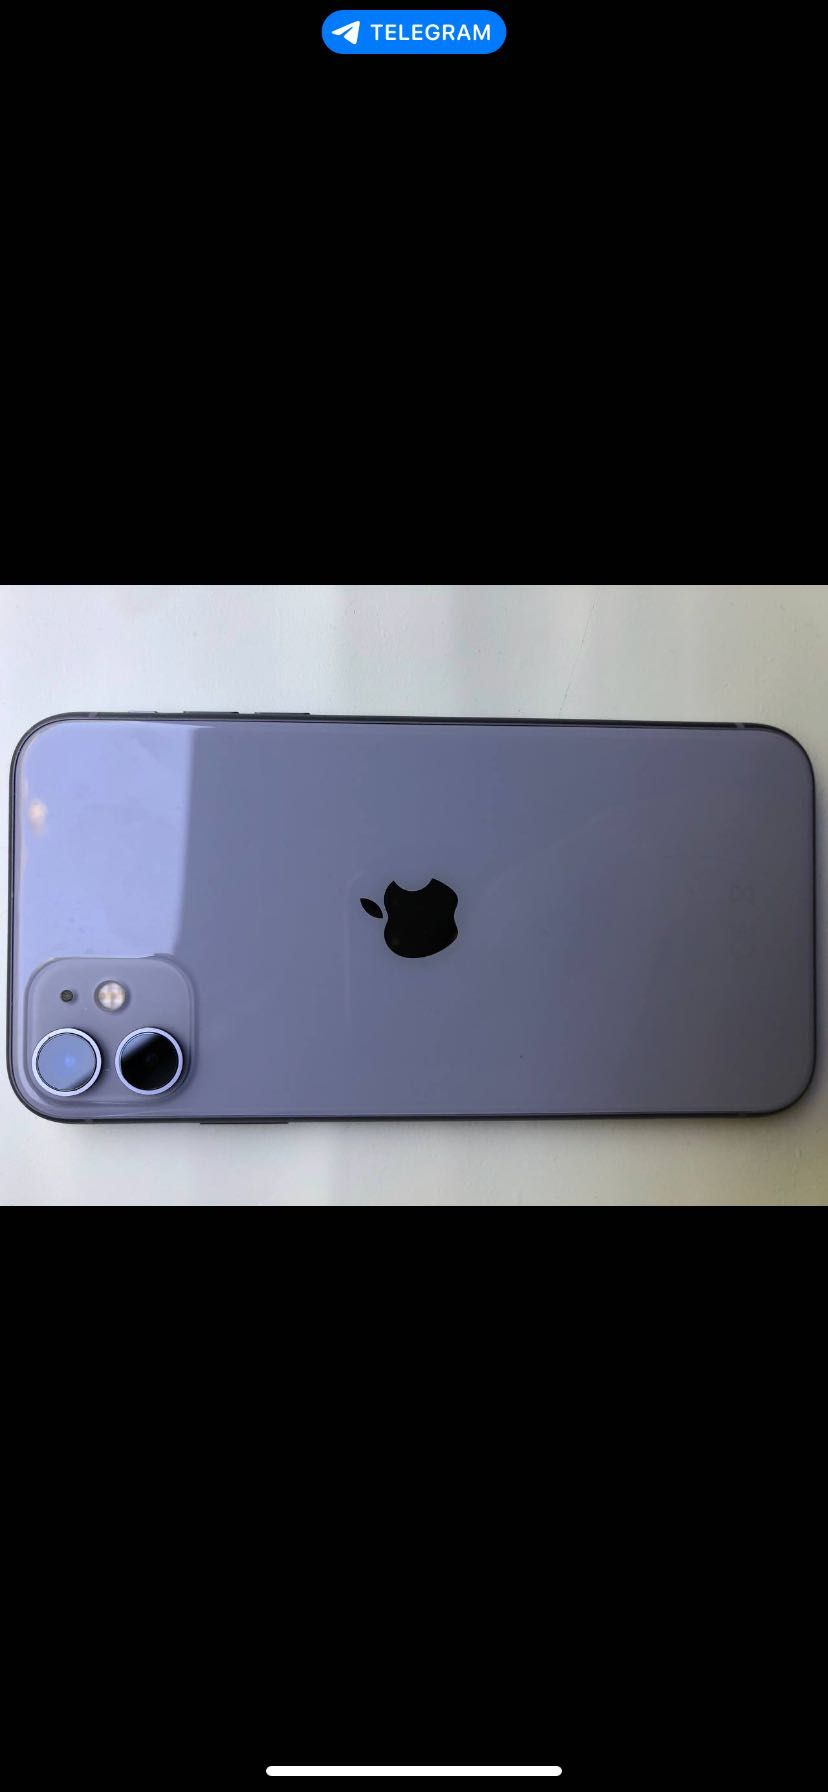 IPhone 11 purple